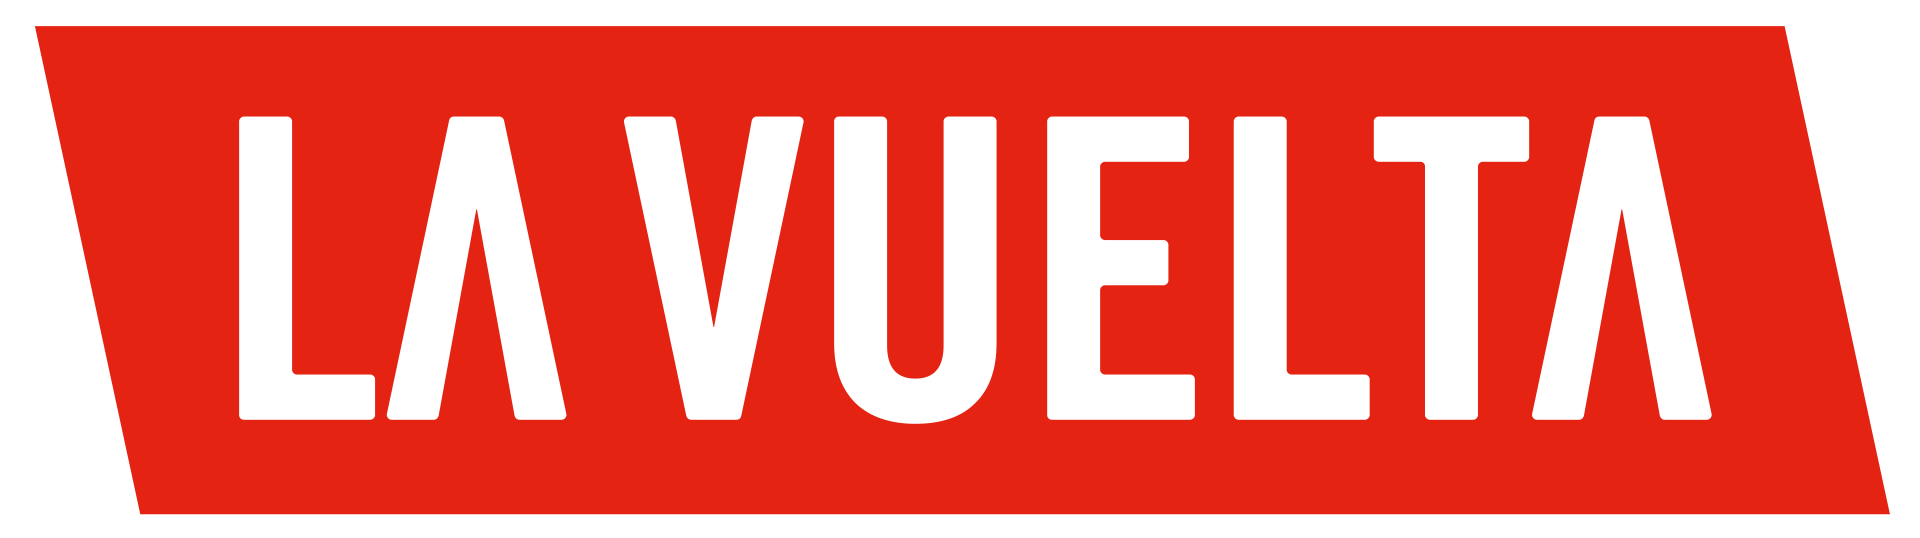 La Vuelta (Spain) logo.svg